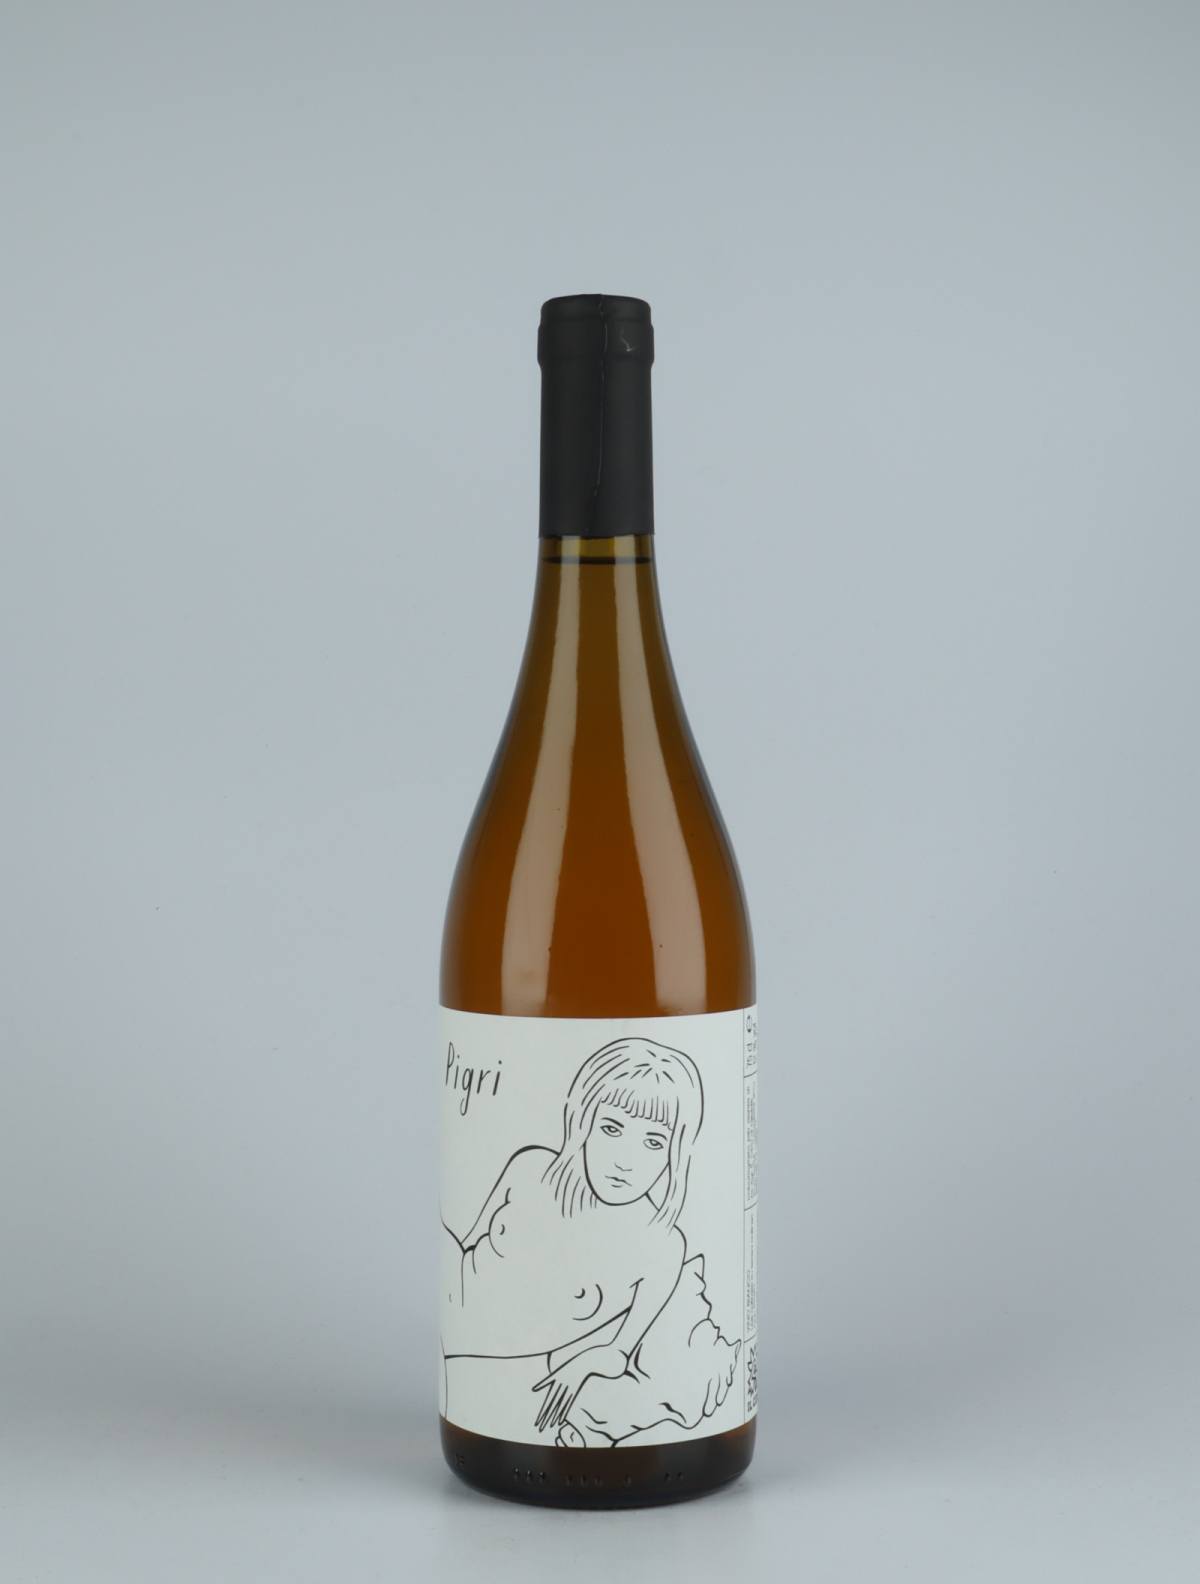 A bottle 2020 Pigri White wine from , Veneto in Italy